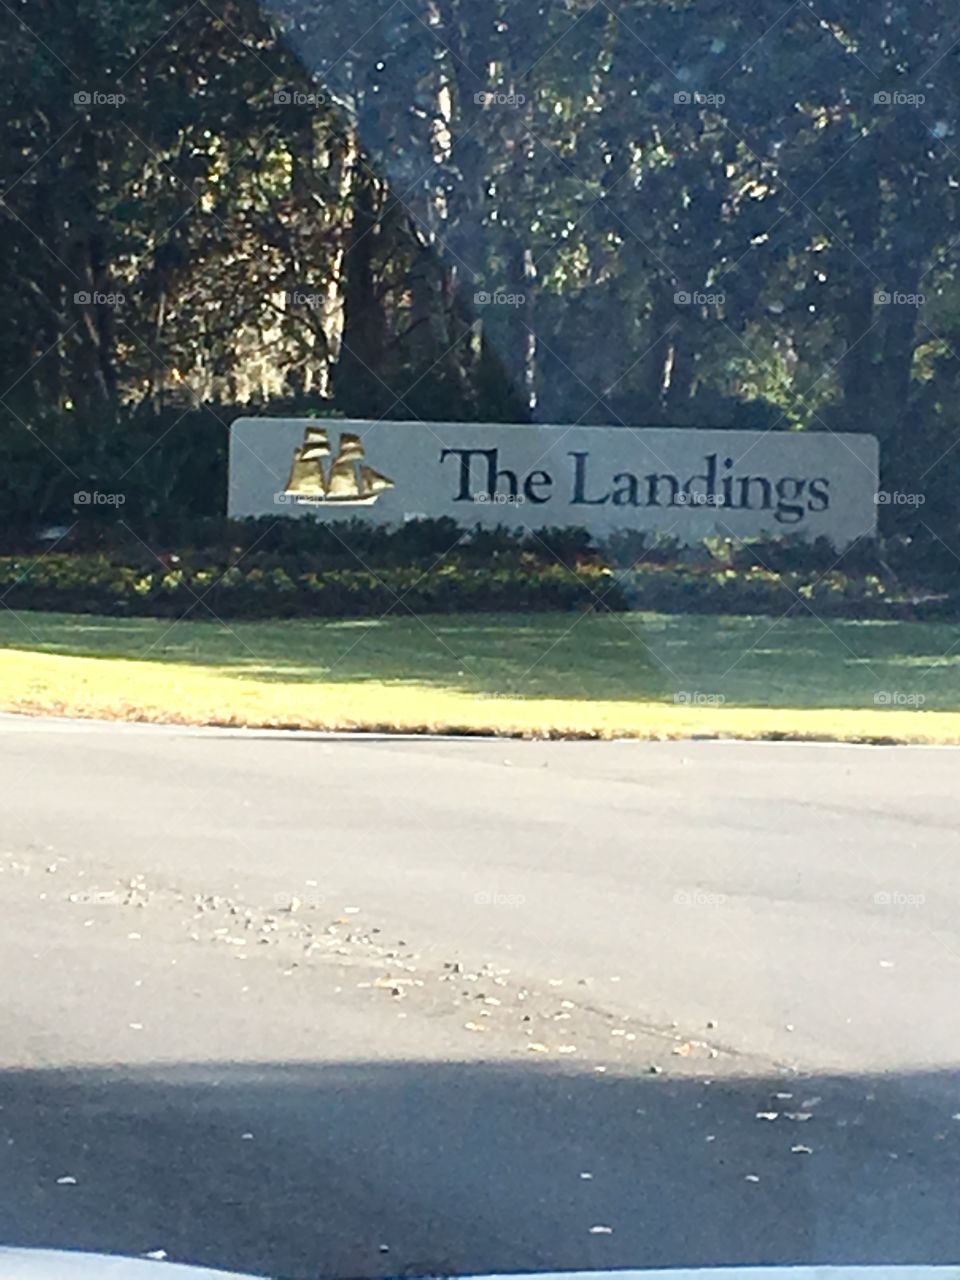 Welcome to The Landings community Savannah Georgia!